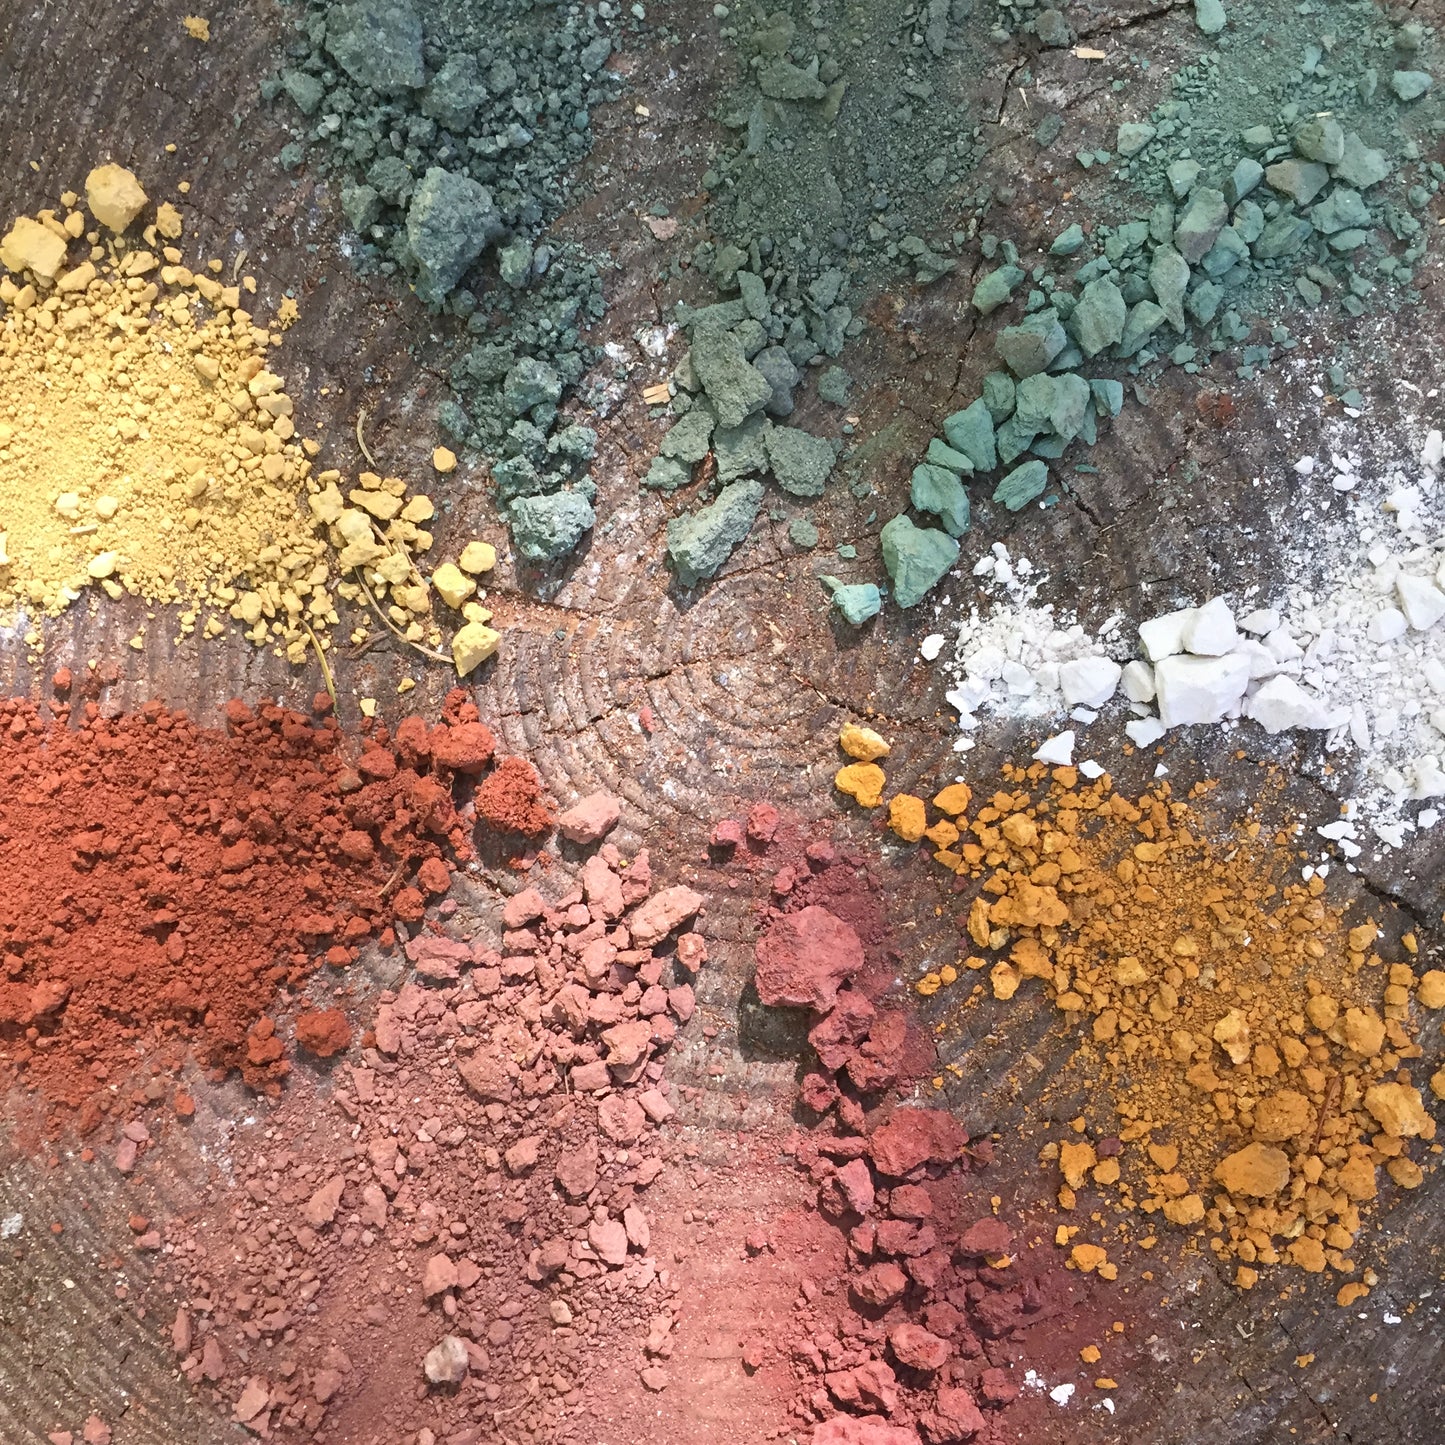 Earth Pigments & Paintmaking Studio